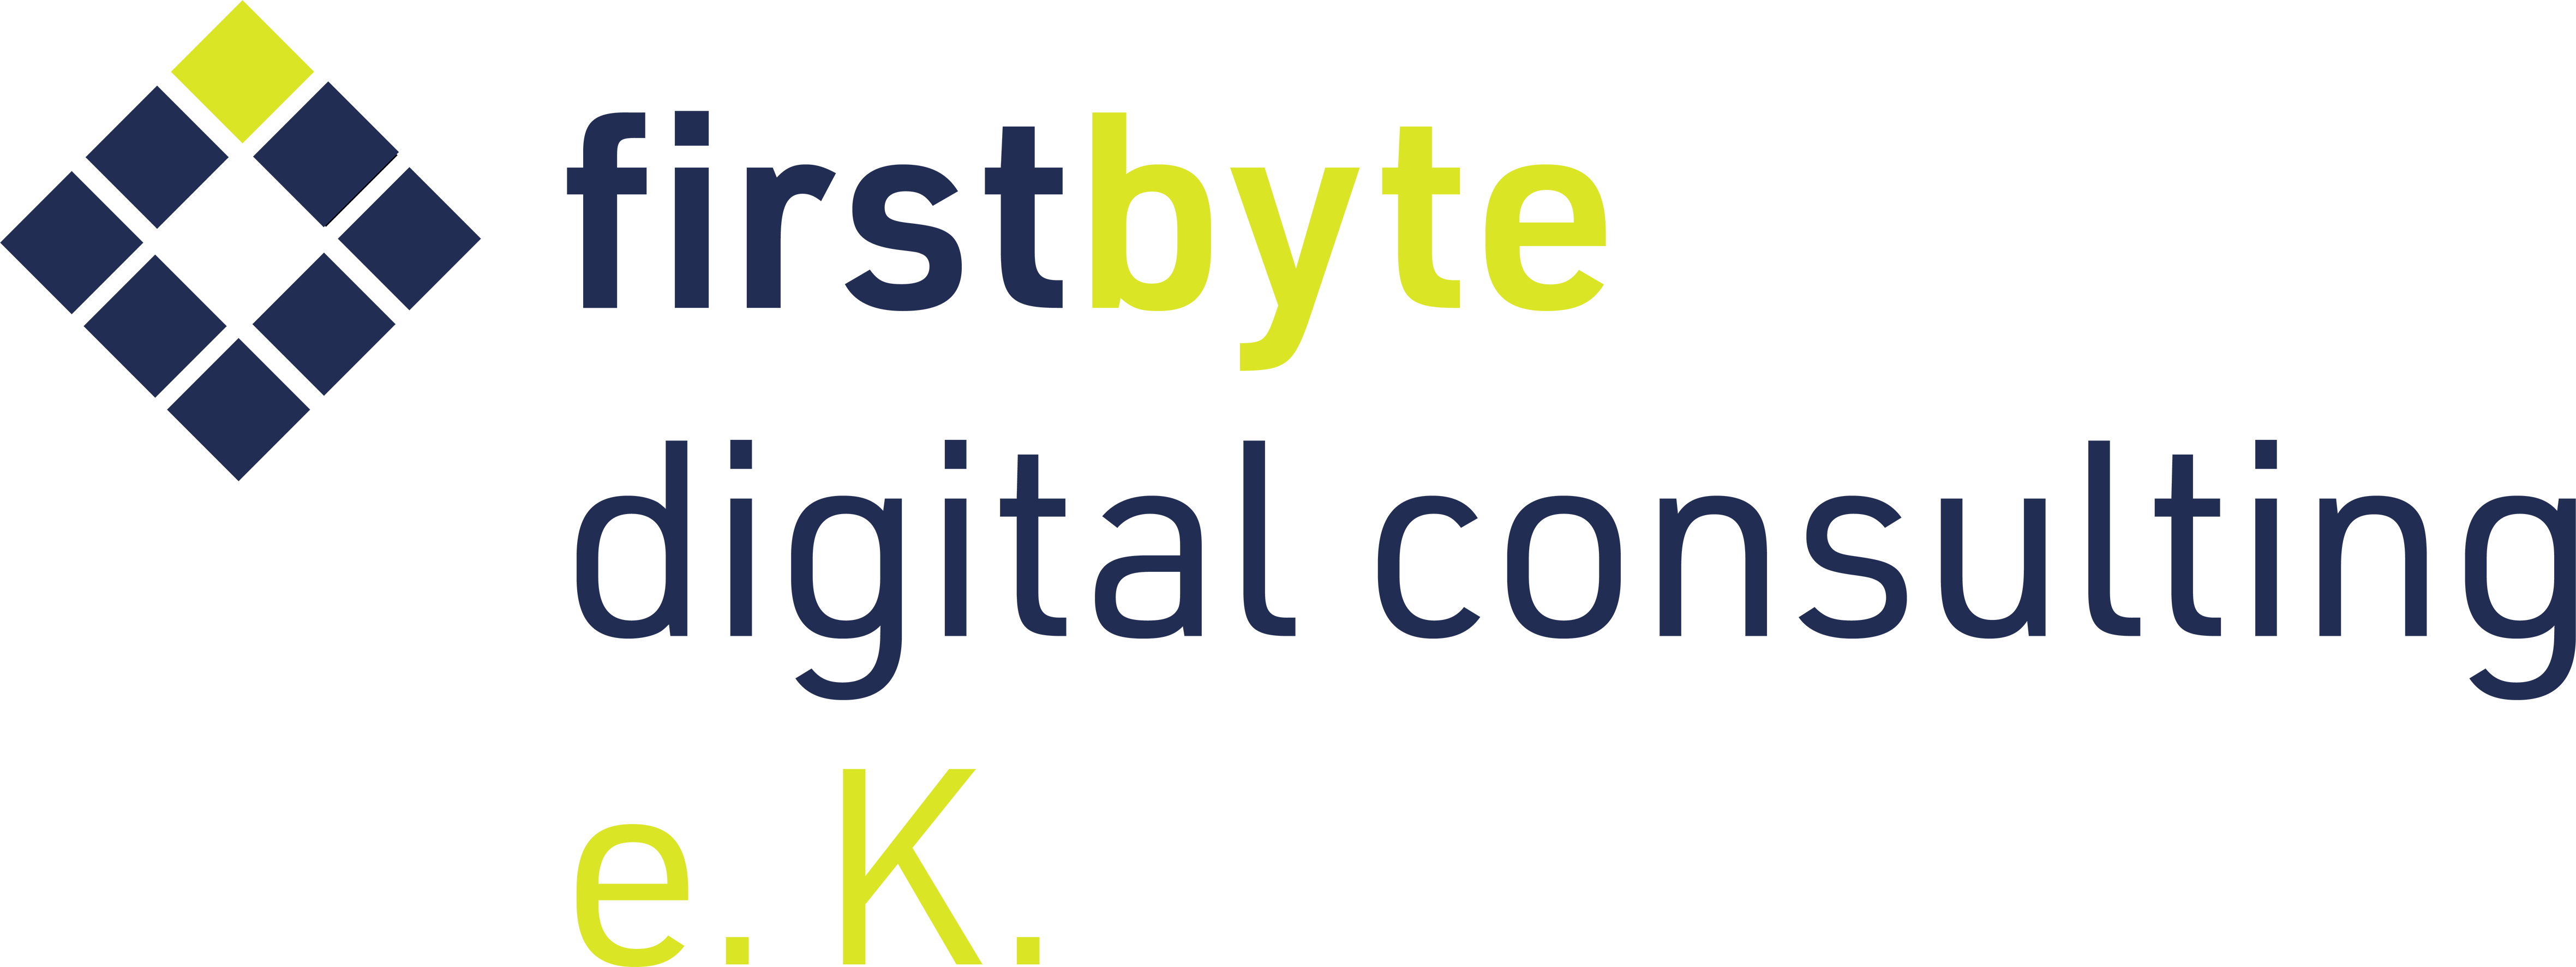 firstbyte digital consulting e.K.